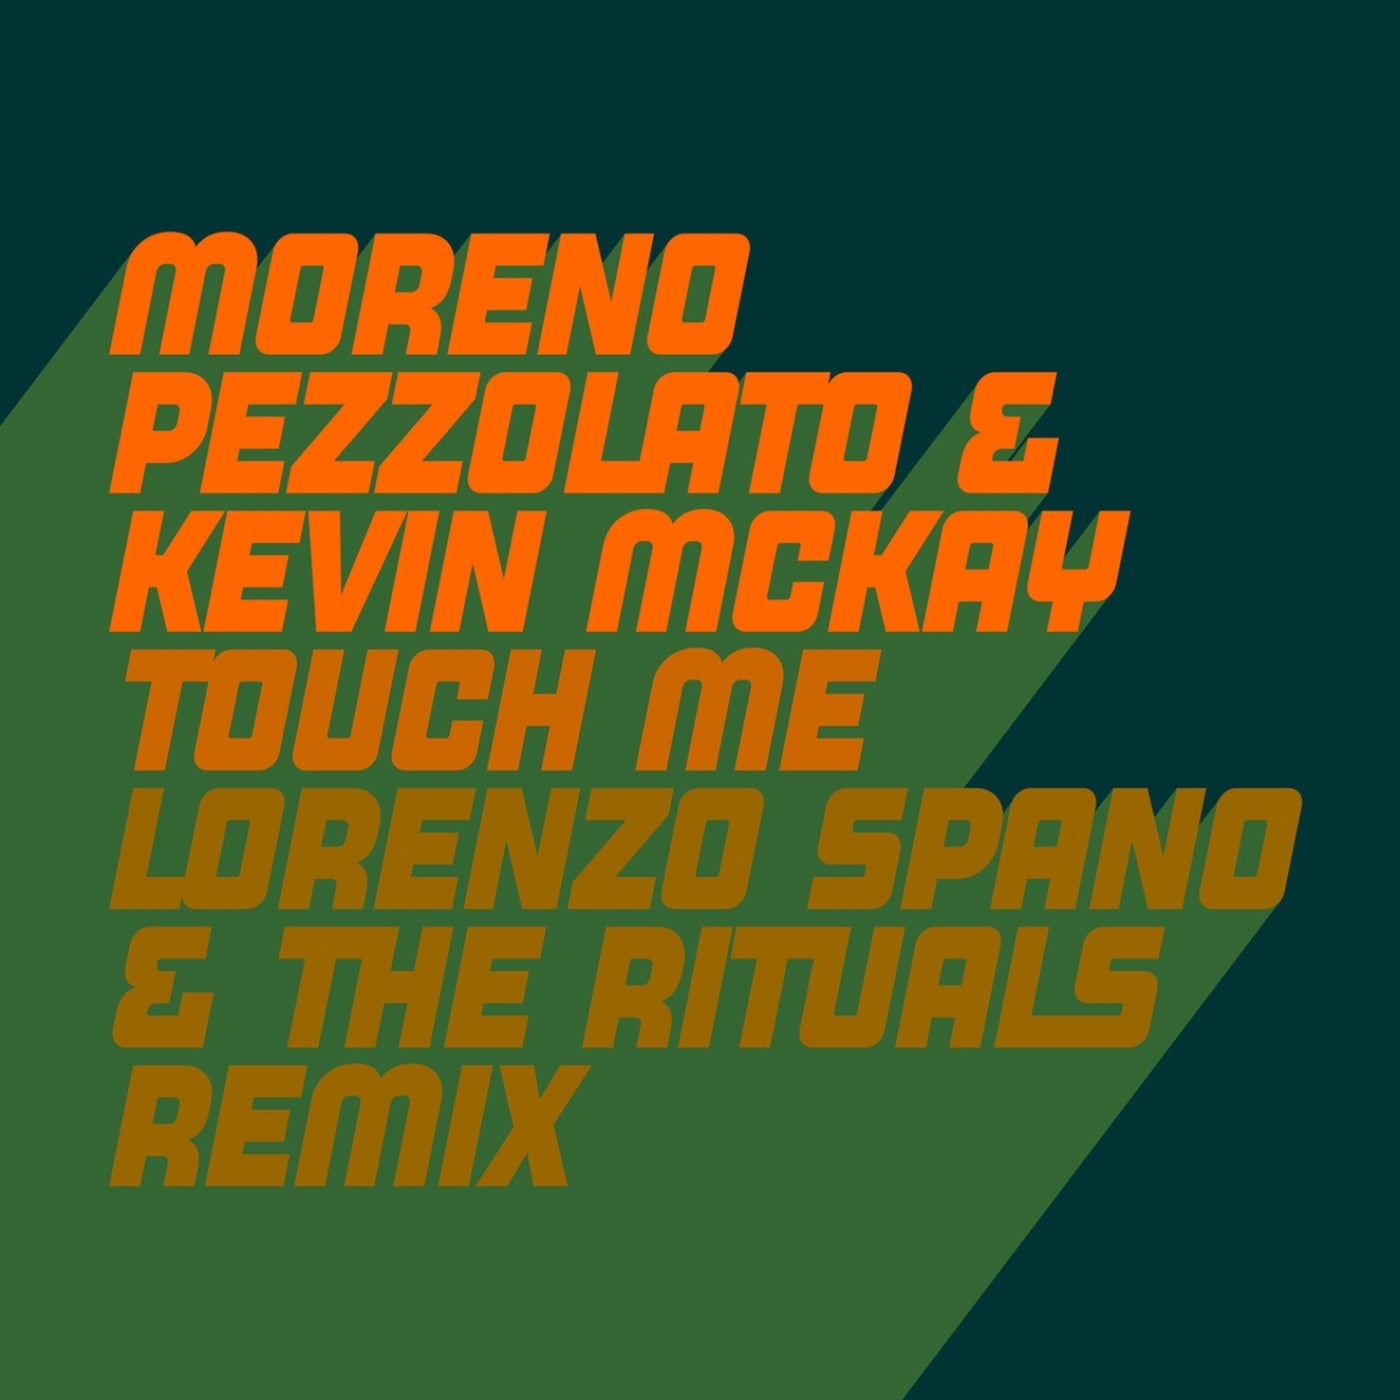 Touch Me (Lorenzo Spano & The Rituals Remix)